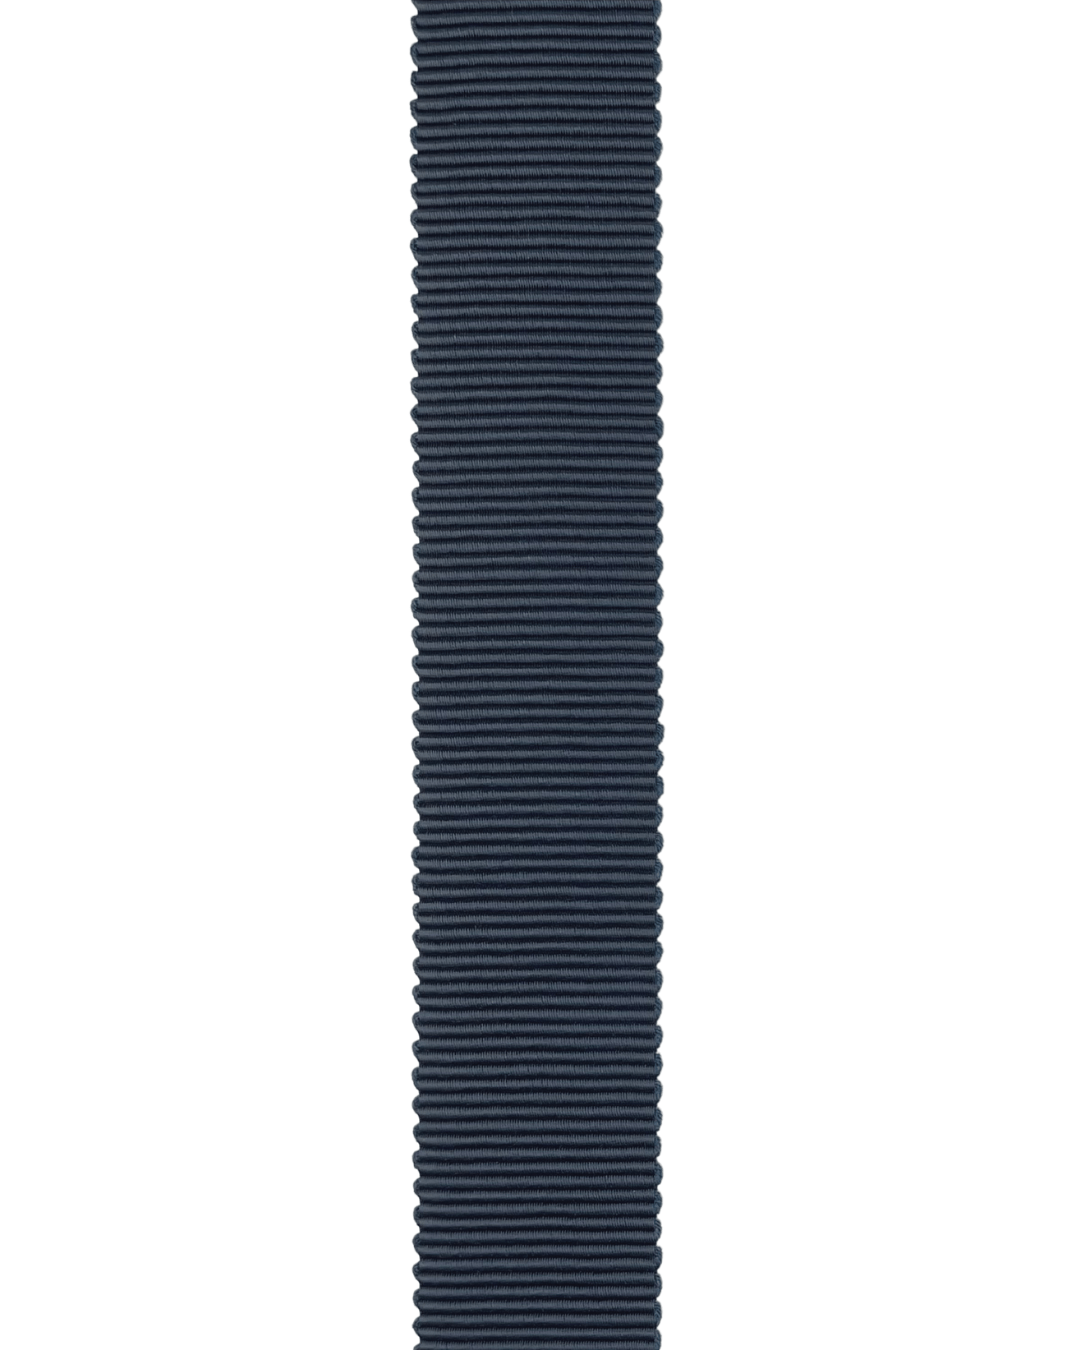 MOKUBA 26mm Grosgrain Ribbon 10m Roll - 4 Colors Available - American Deadstock